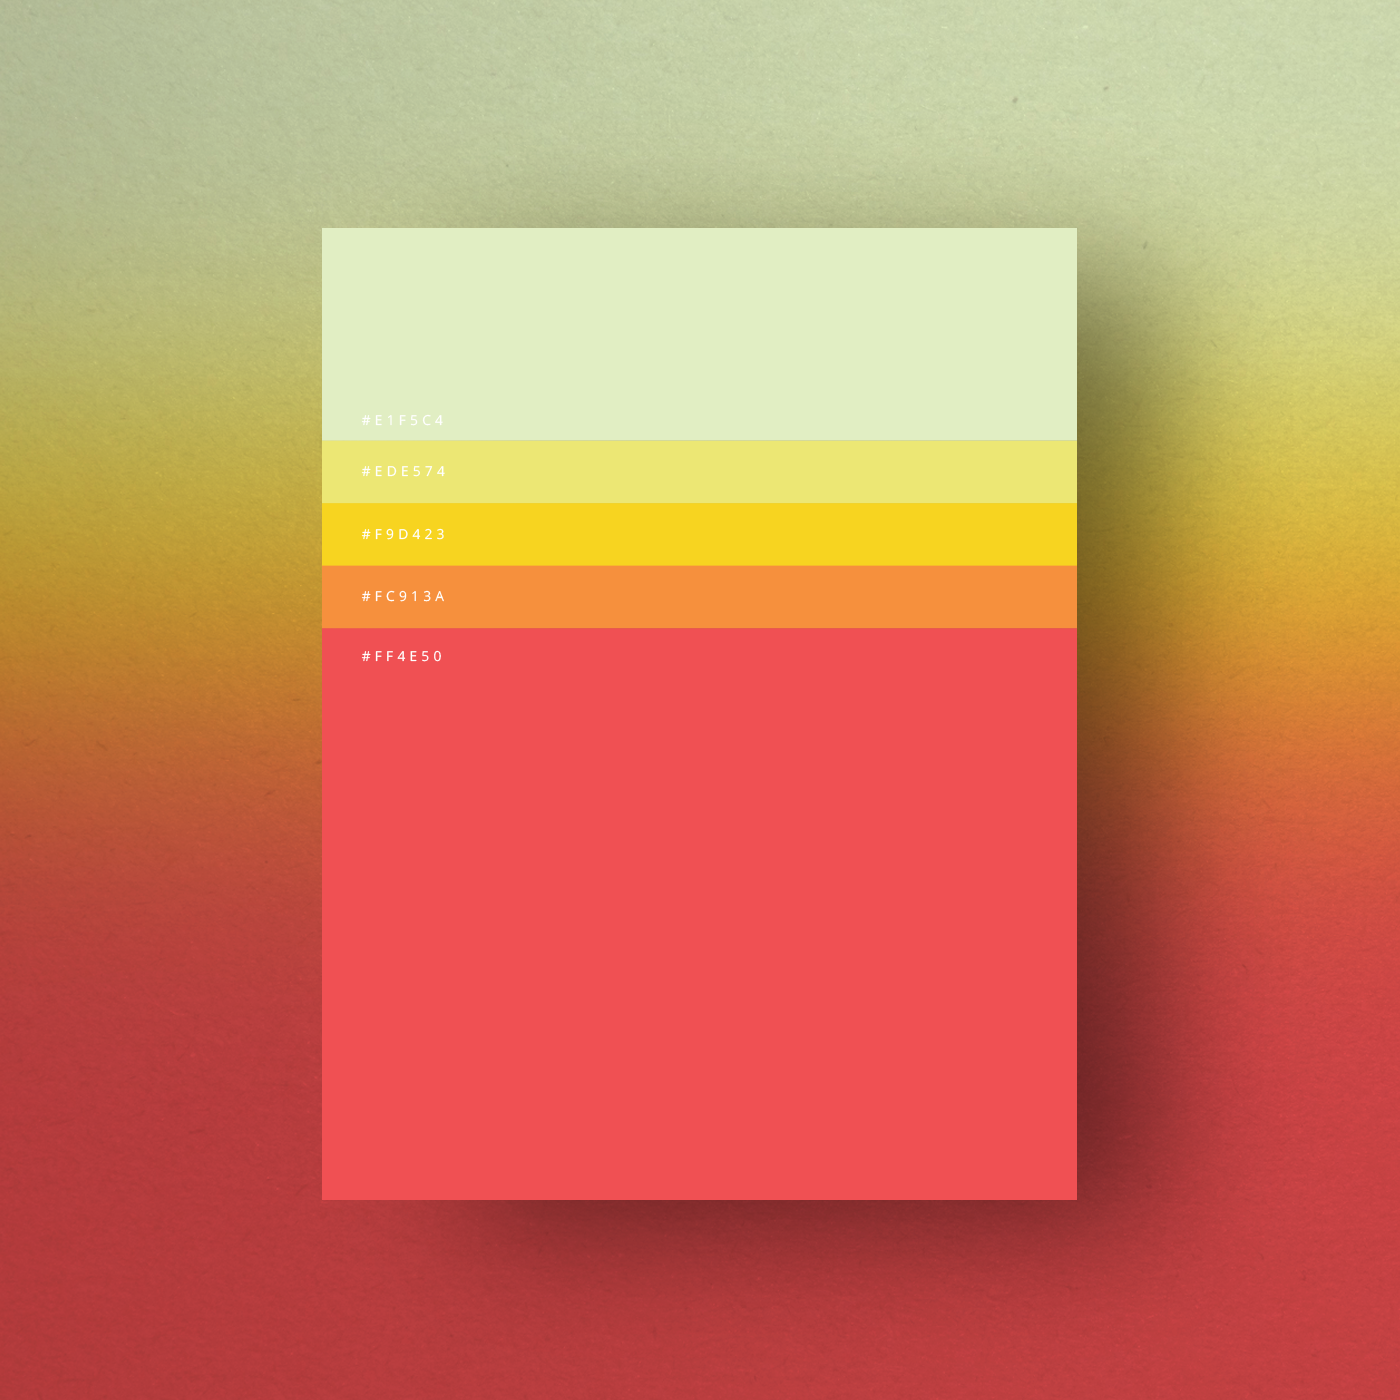 23 Color Palette Ideas To Inspire Your Next Graphic Design Project